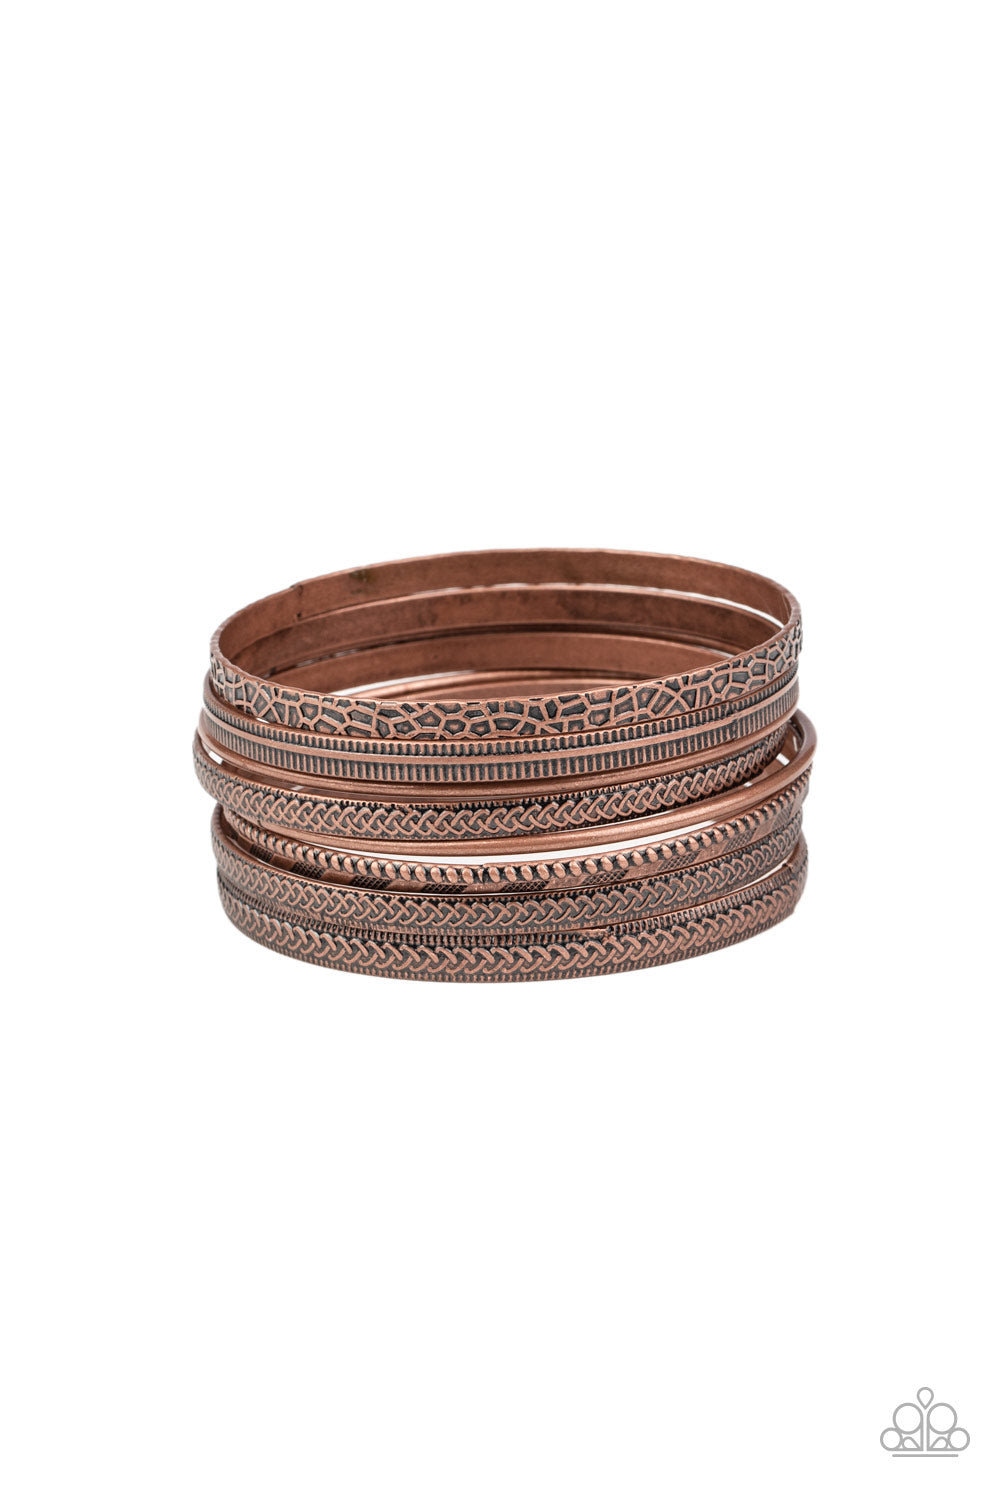 Relics On Repeat - Copper Bracelet